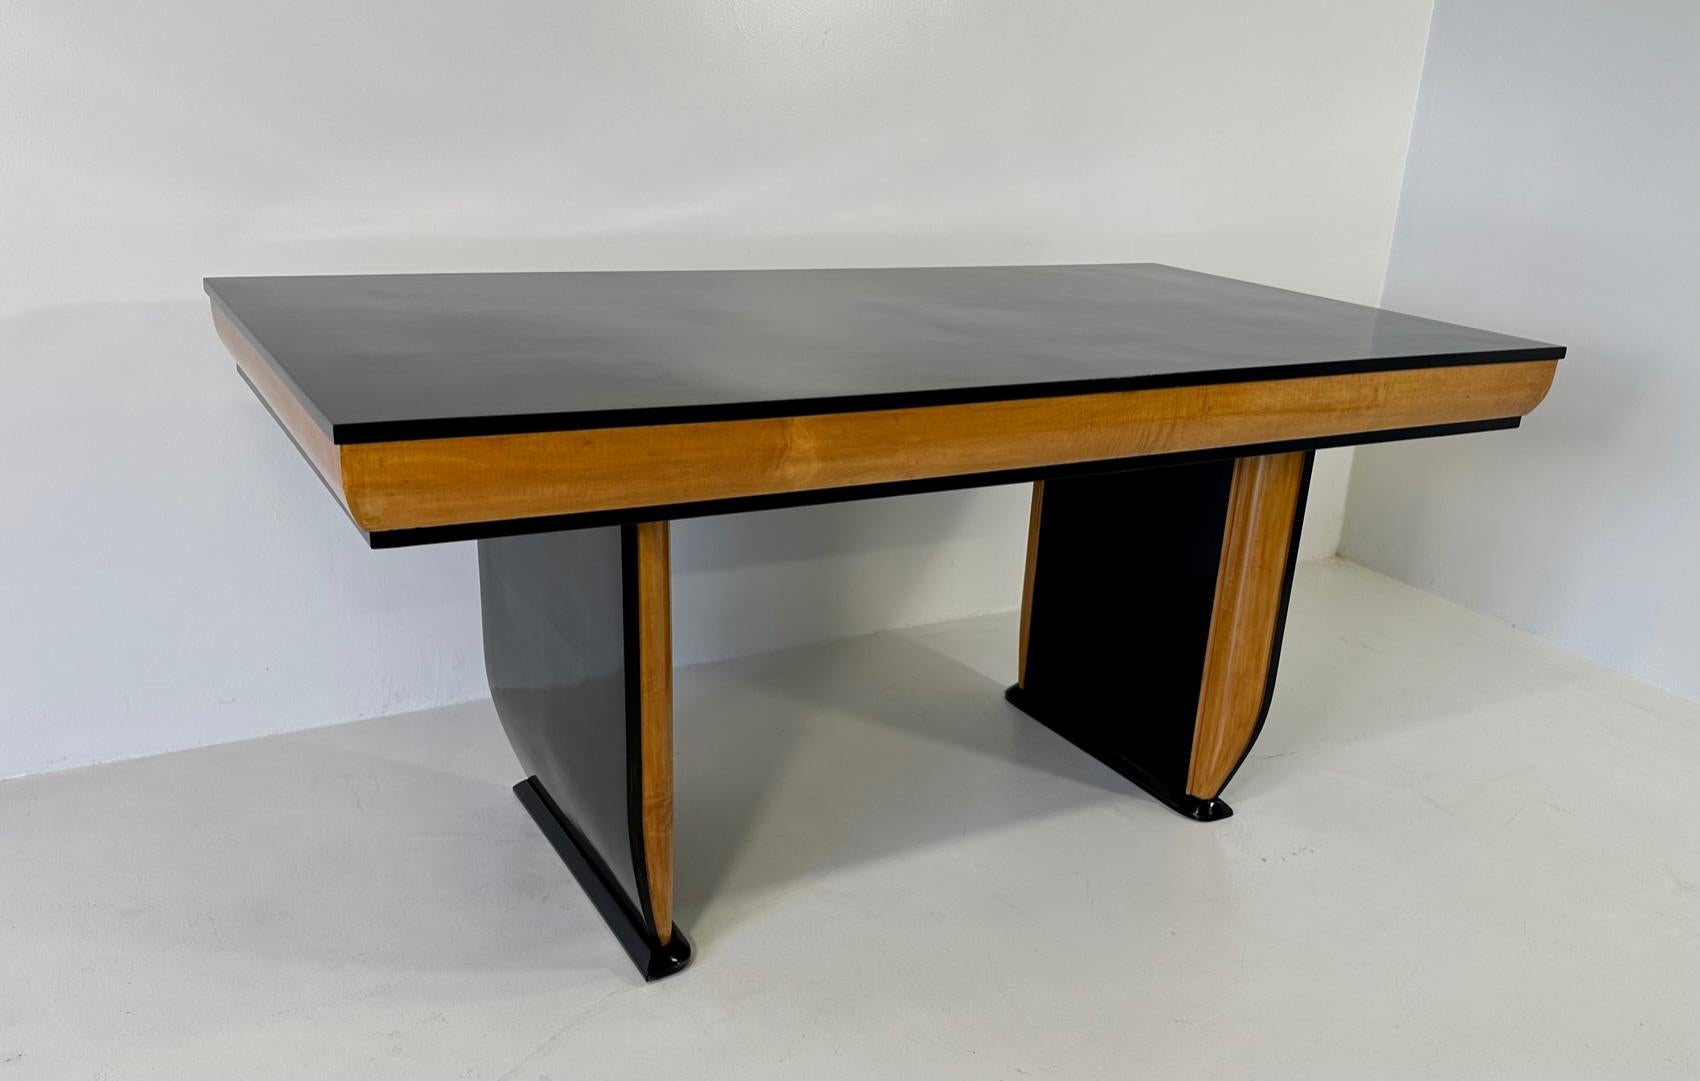 Italian Art Deco Black Lacquer and Maple Table, attr. to Borsani, 1940s For Sale 1